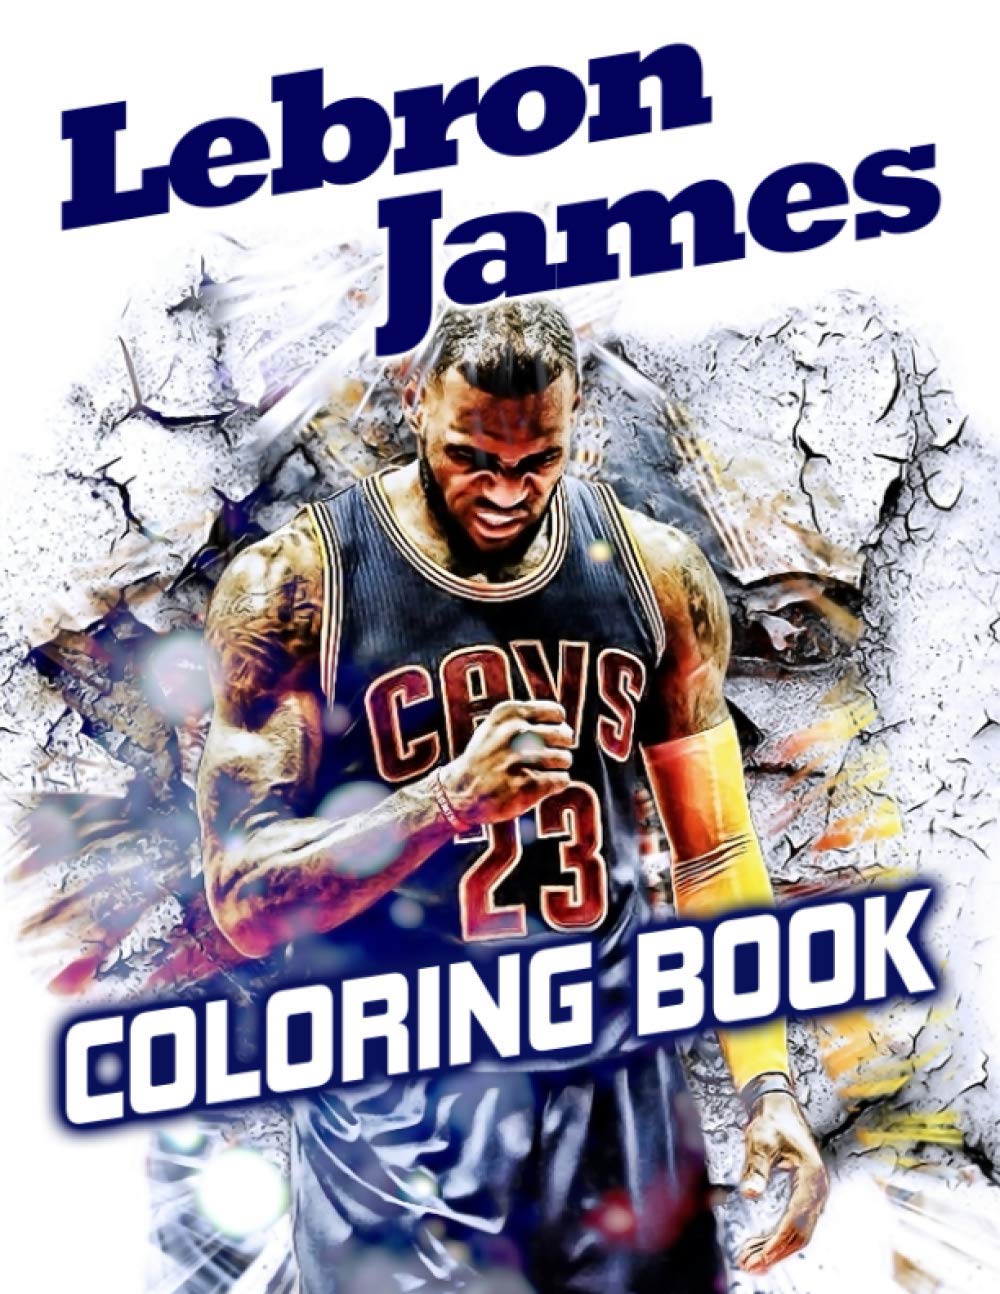 Lebron james coloring book fantastic an adult coloring book lebron james relaxation by isaac marsh